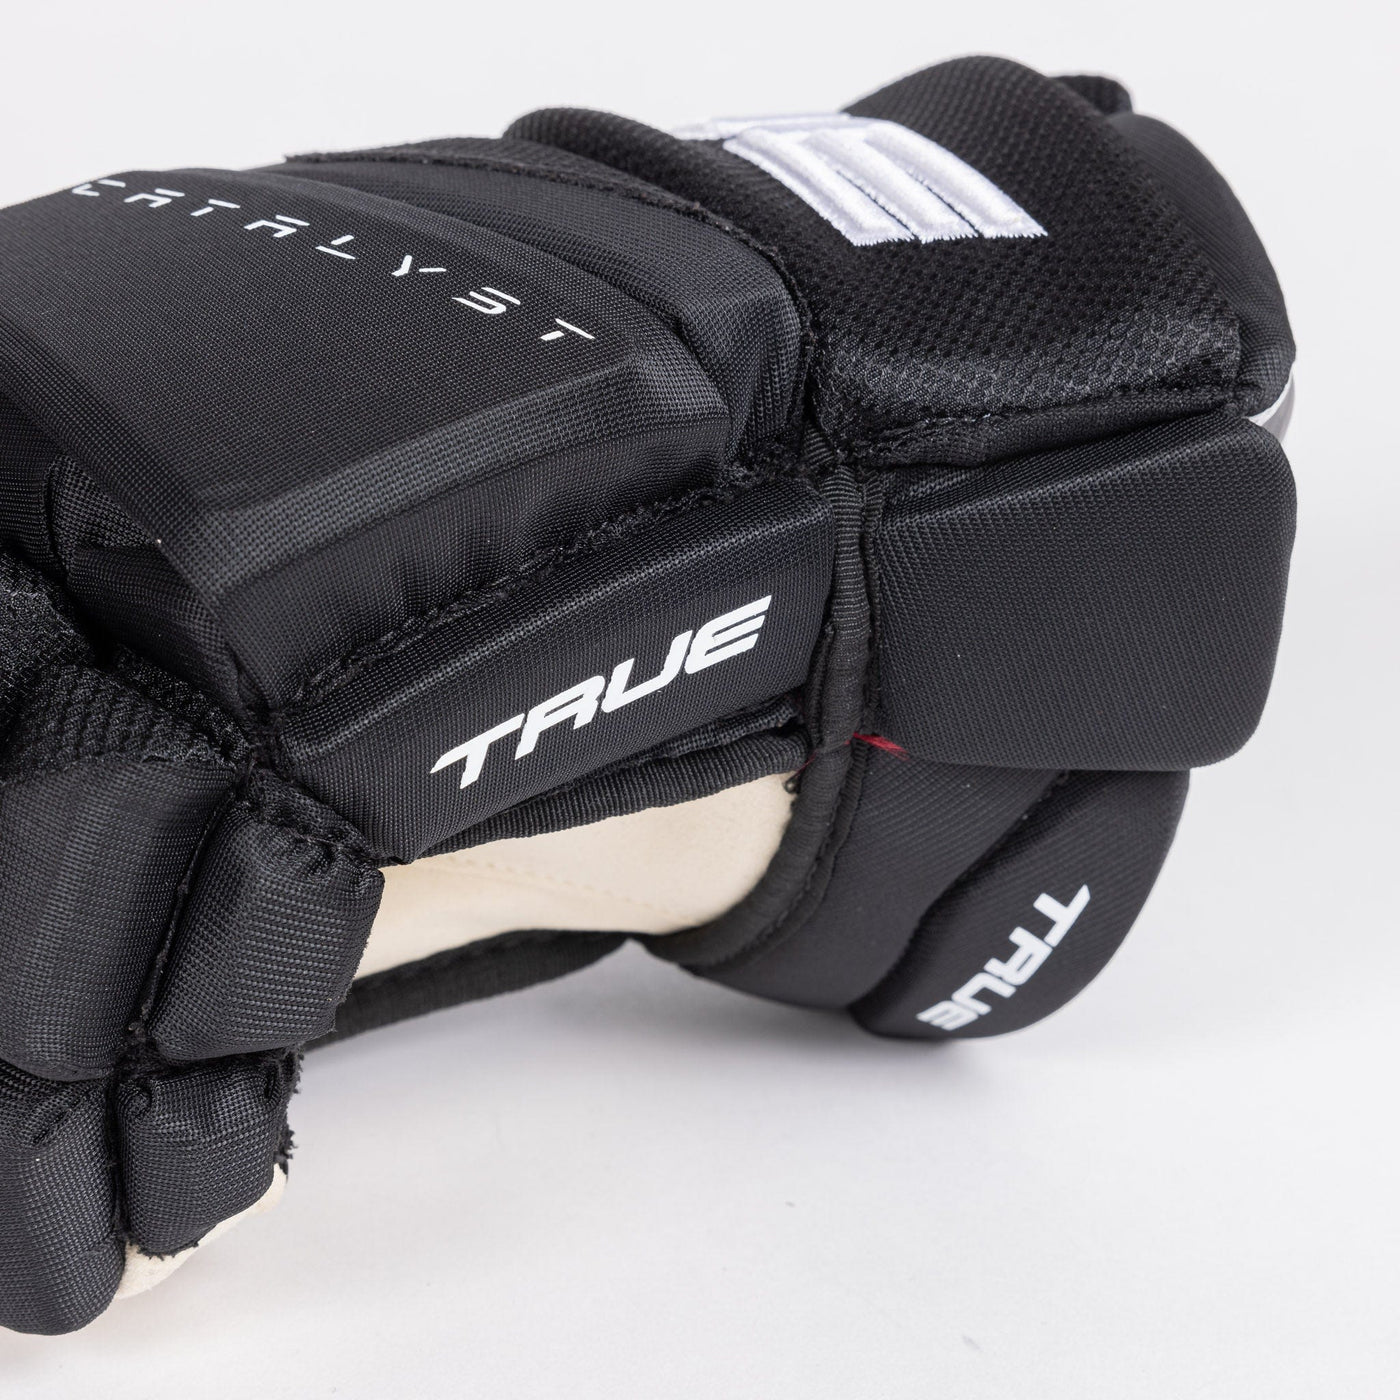 TRUE Catalyst Pro Stock Senior Hockey Glove - Seattle - The Hockey Shop Source For Sports